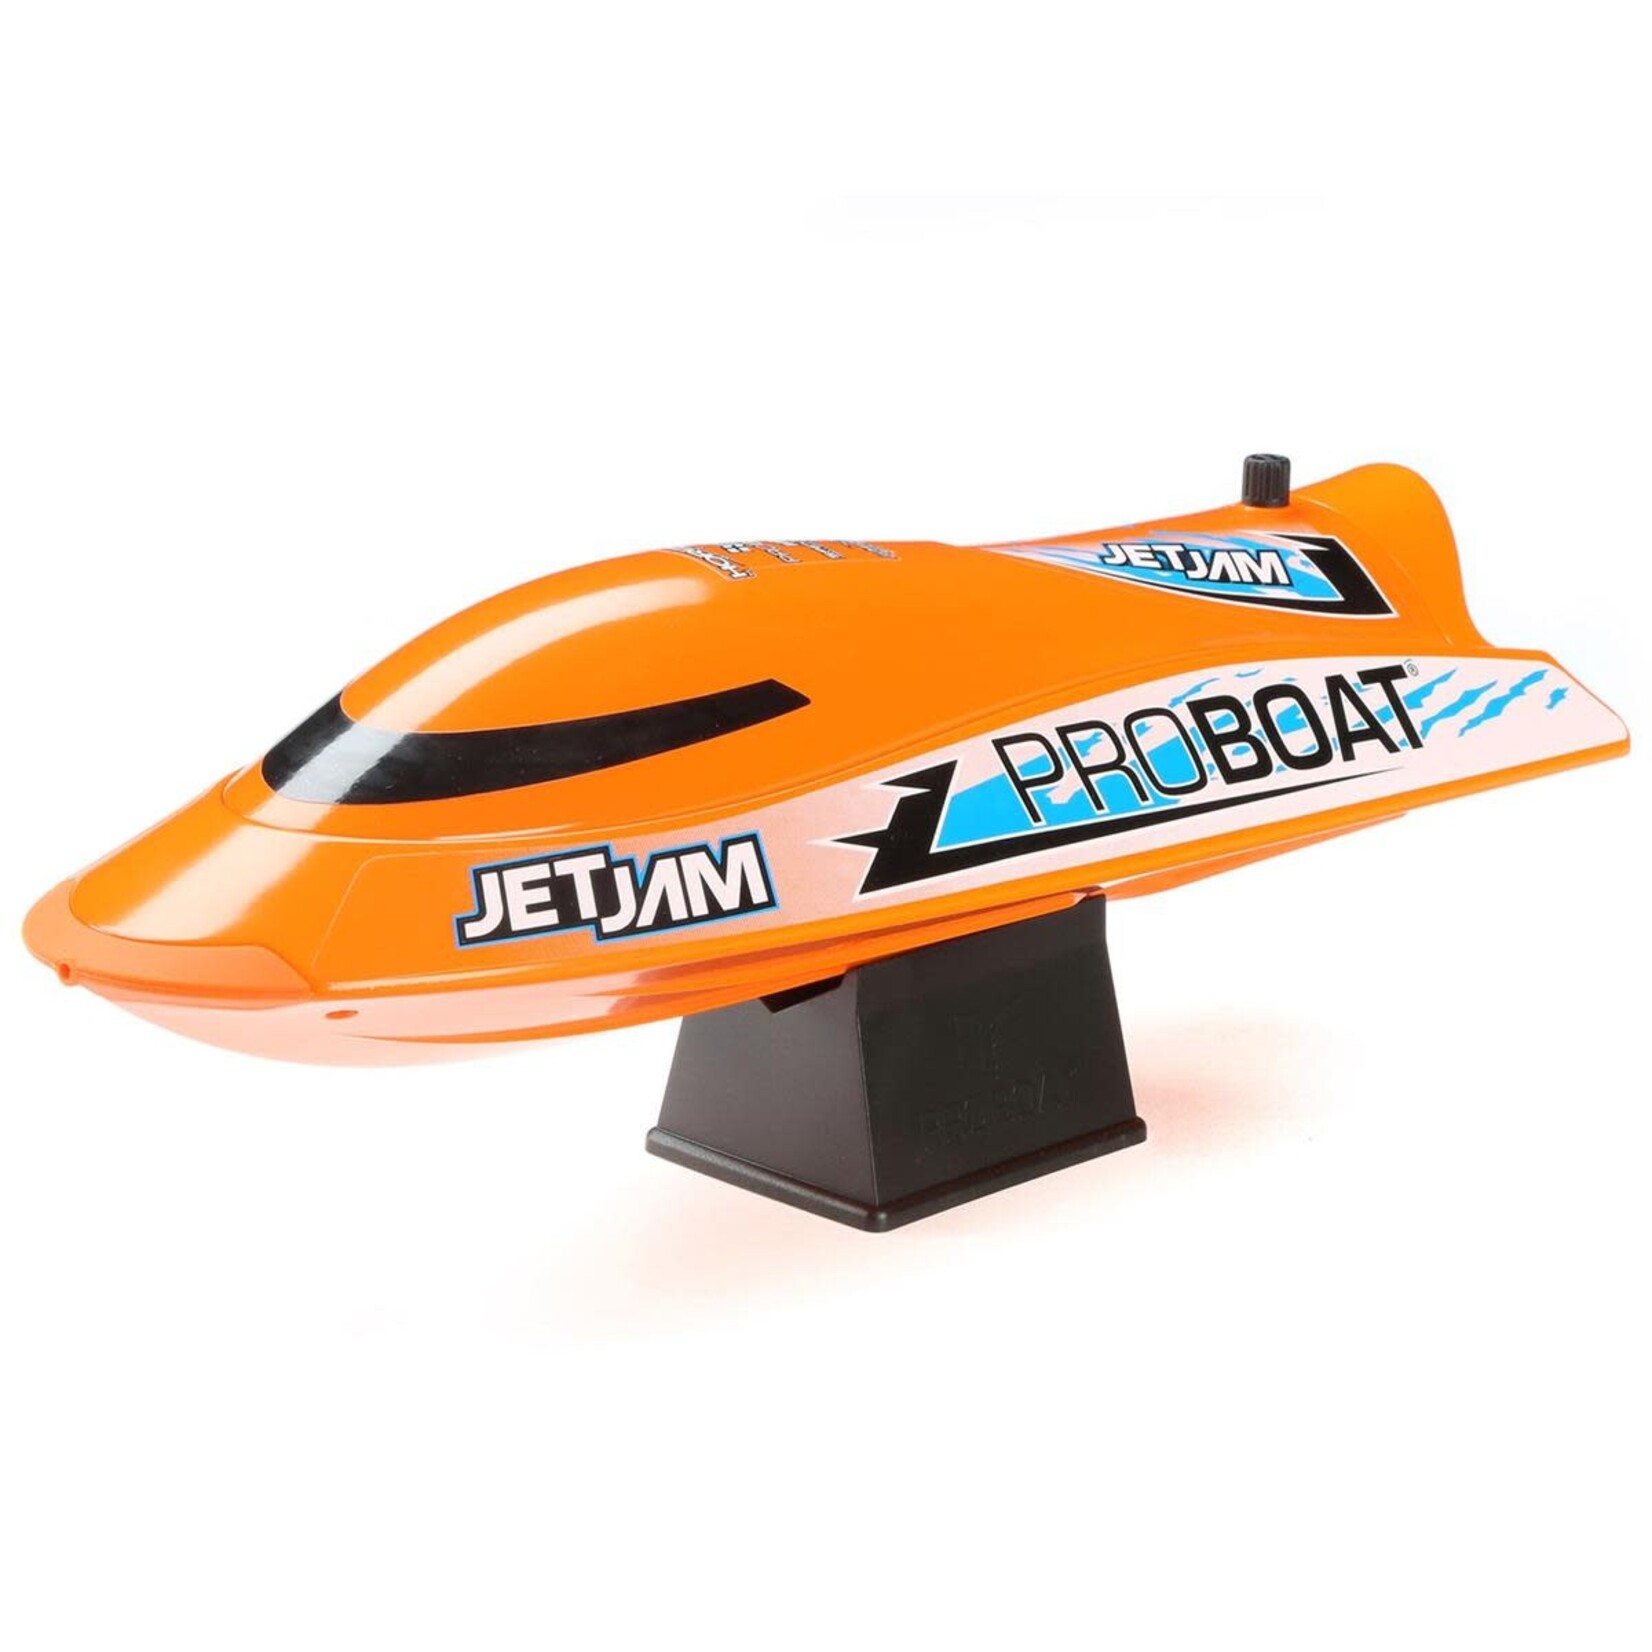 Pro Boat Pro Boat Jet Jam V2 12" Self-Righting Brushed RTR Pool Race Boat (Orange) w/2.4GHz Radio, Battery & Charger #PRB08031V2T1